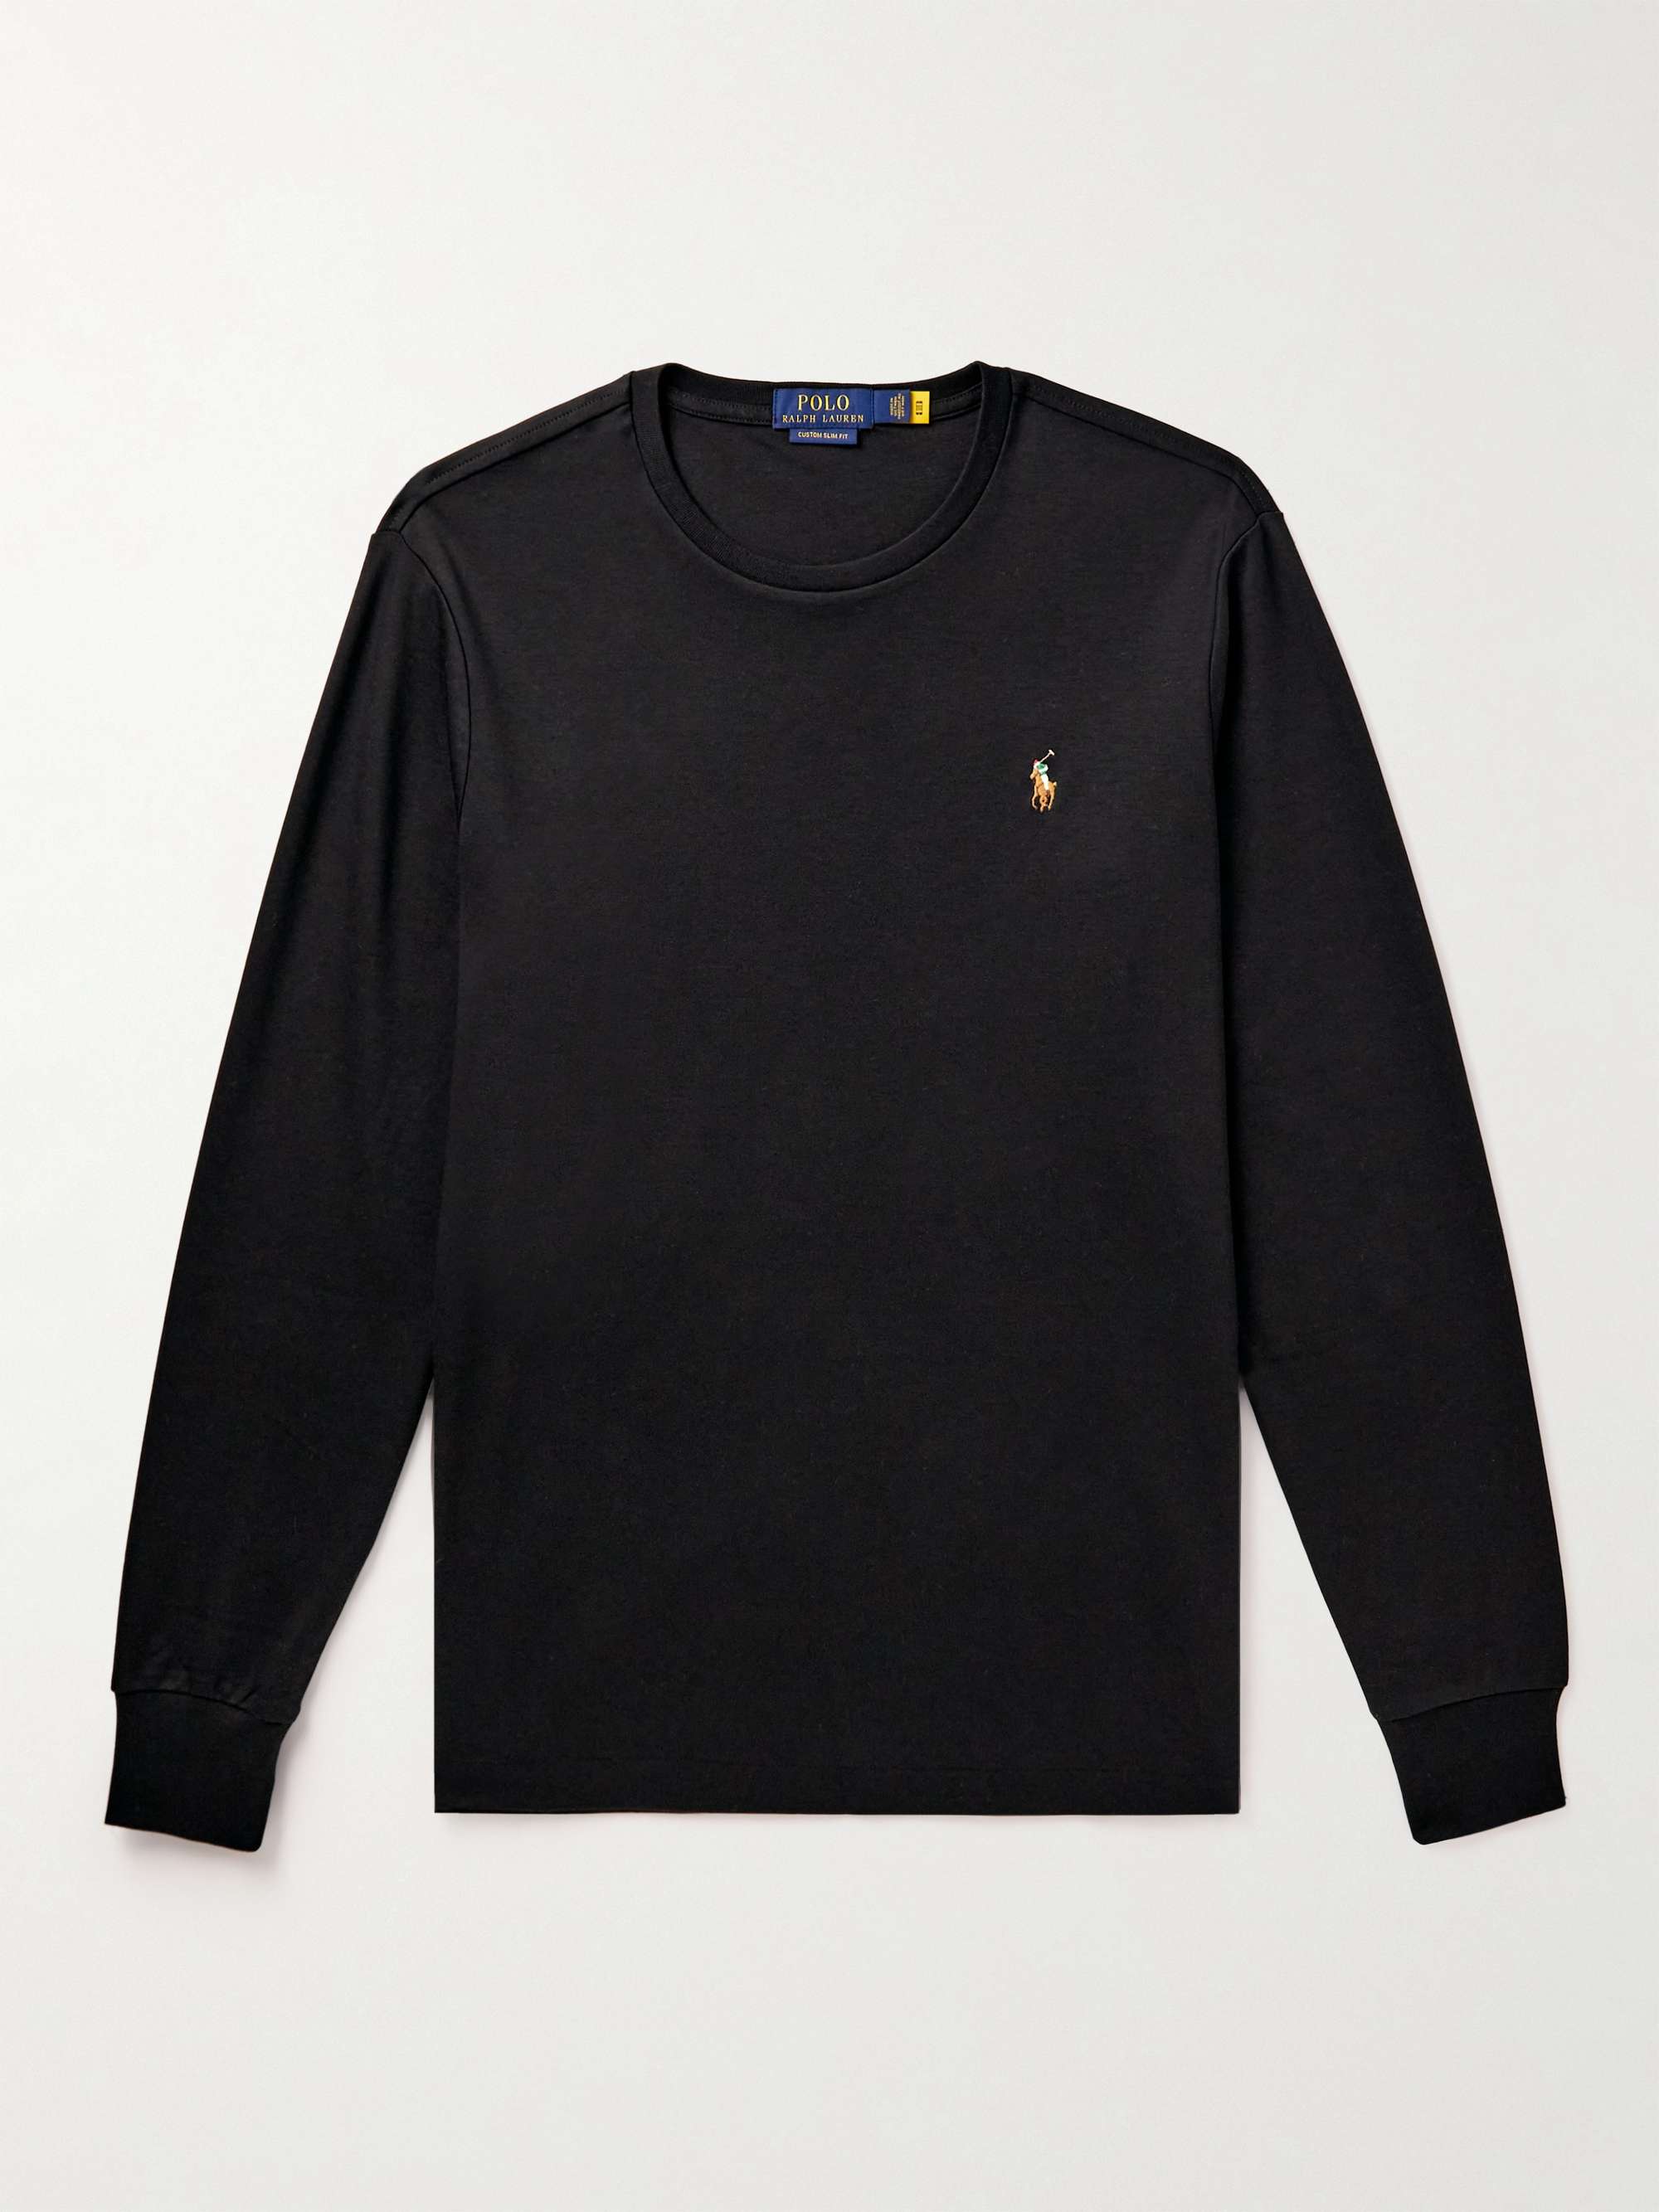 POLO RALPH LAUREN Logo-Embroidered Cotton-Jersey T-Shirt,Black